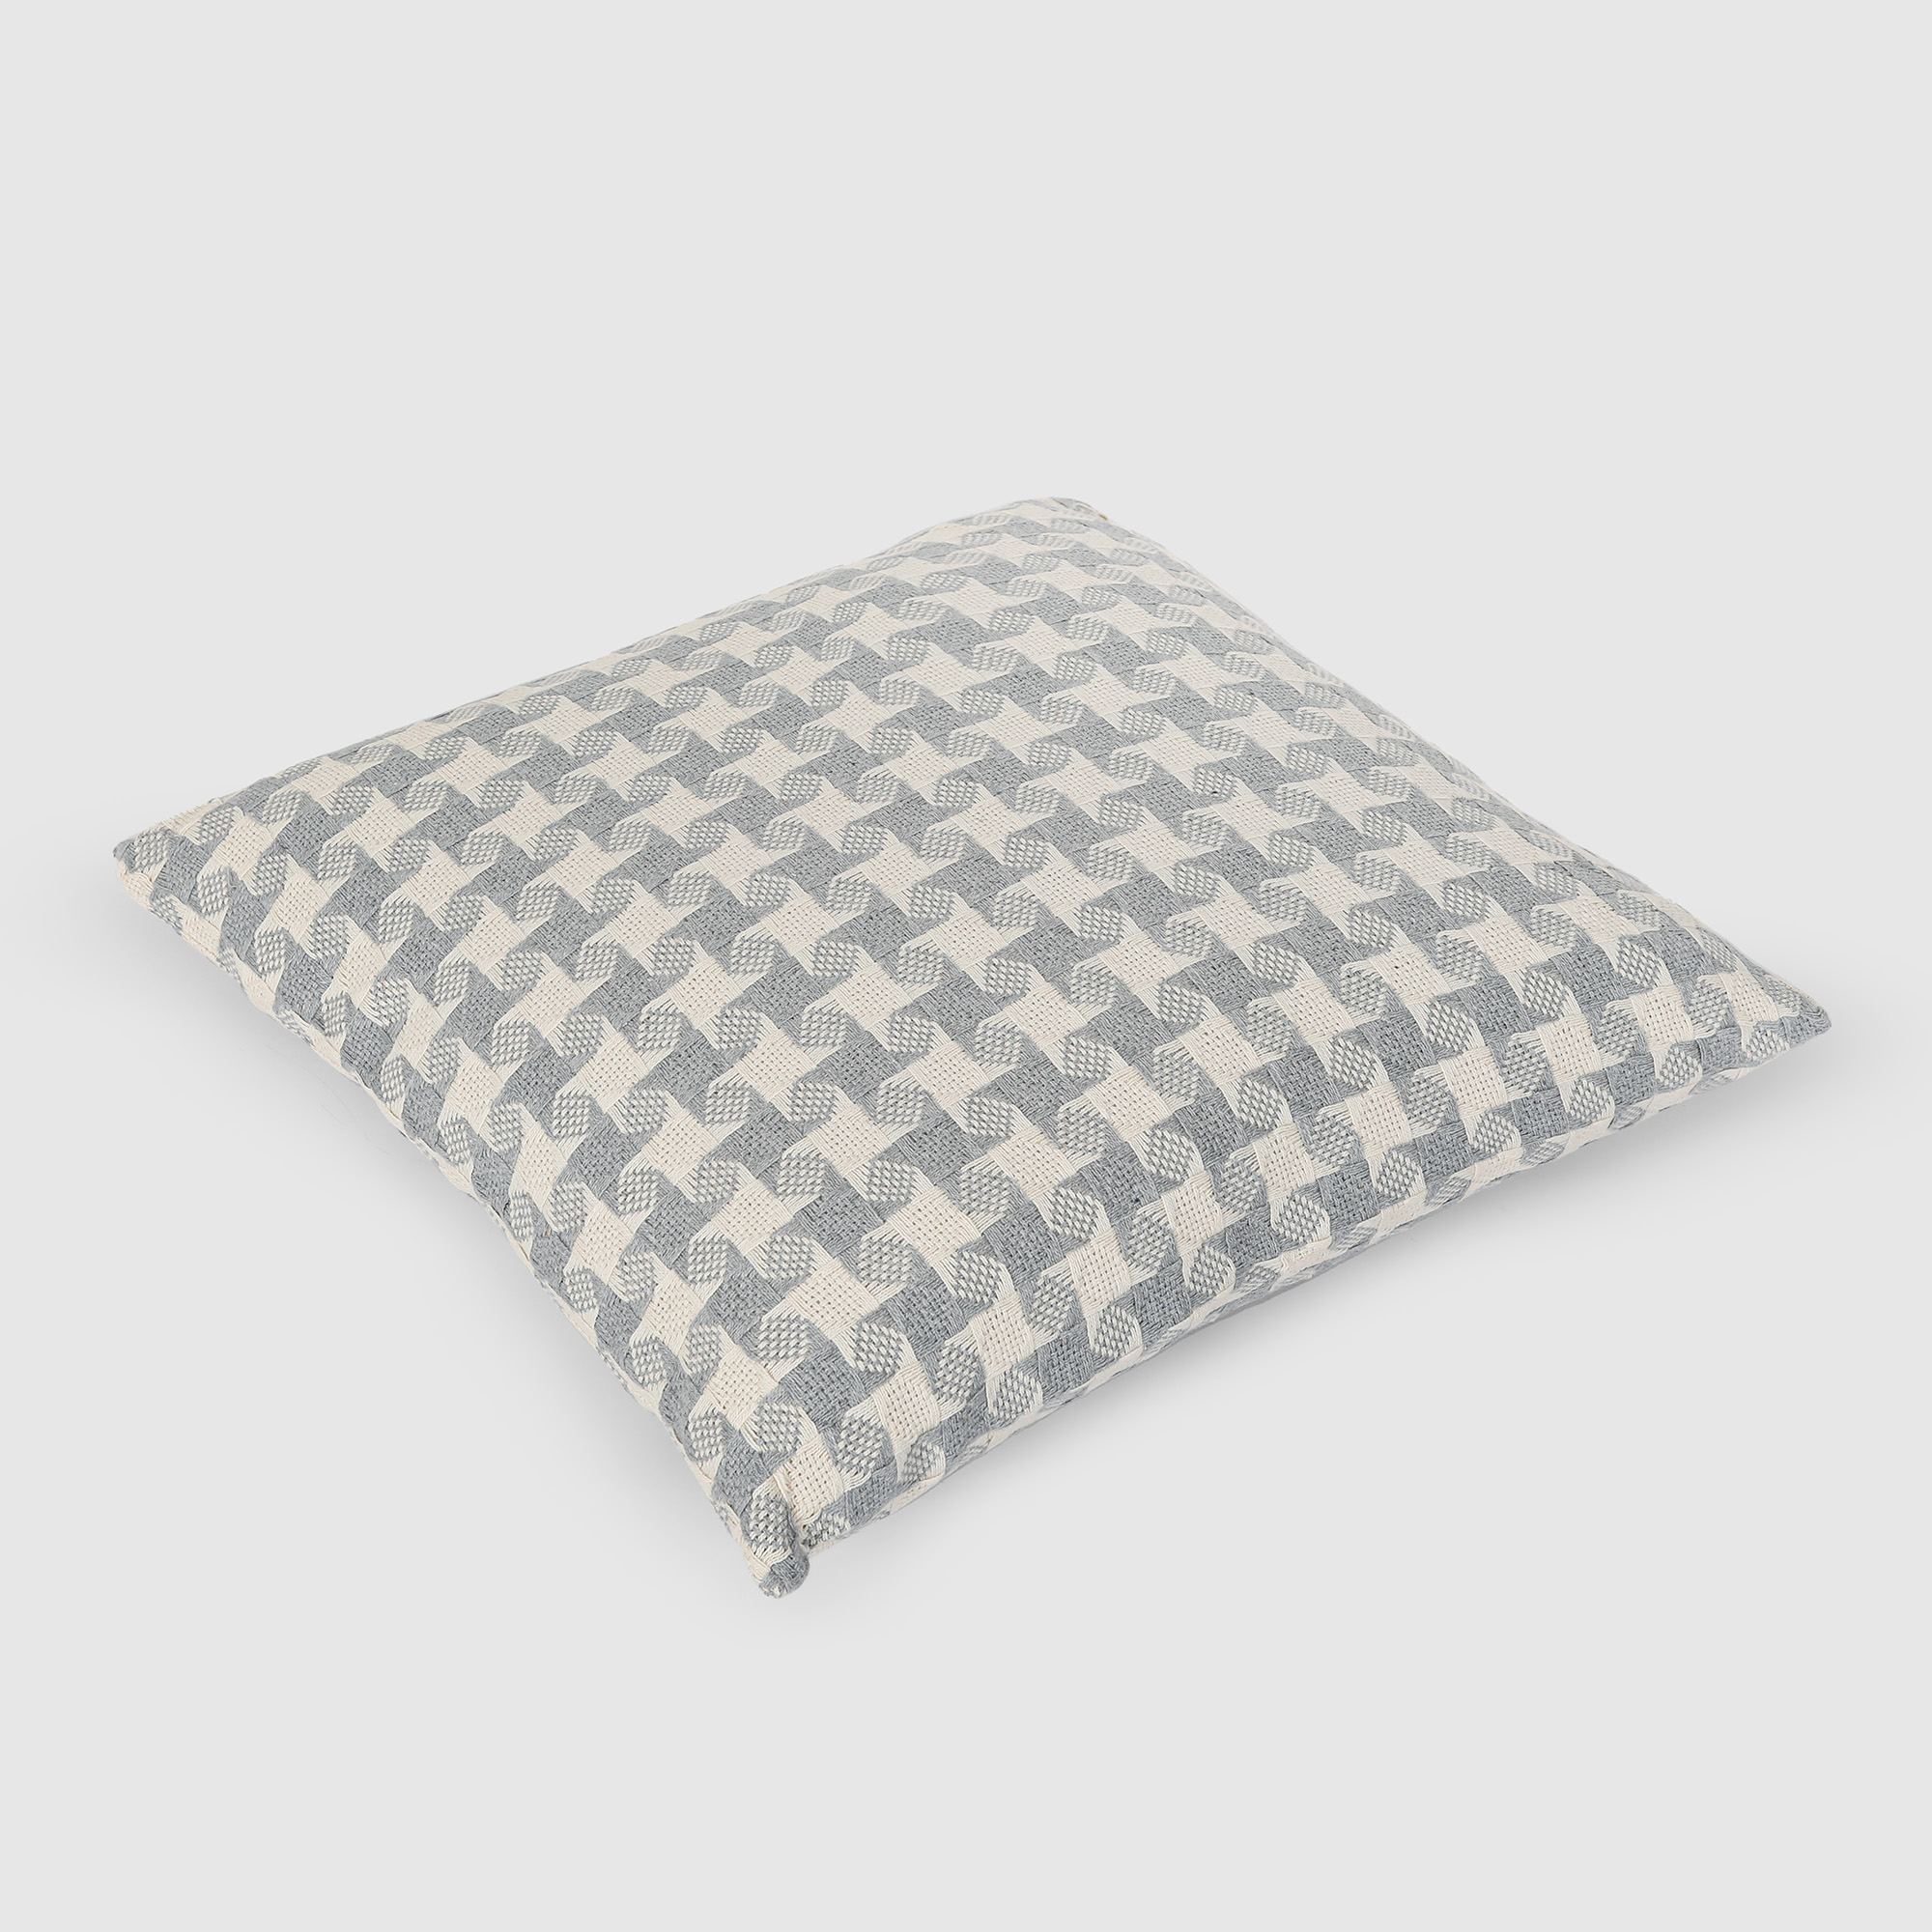 Подушка Homelines textiles Peid-de-Poule grey серая 45х45 см, цвет серый - фото 3